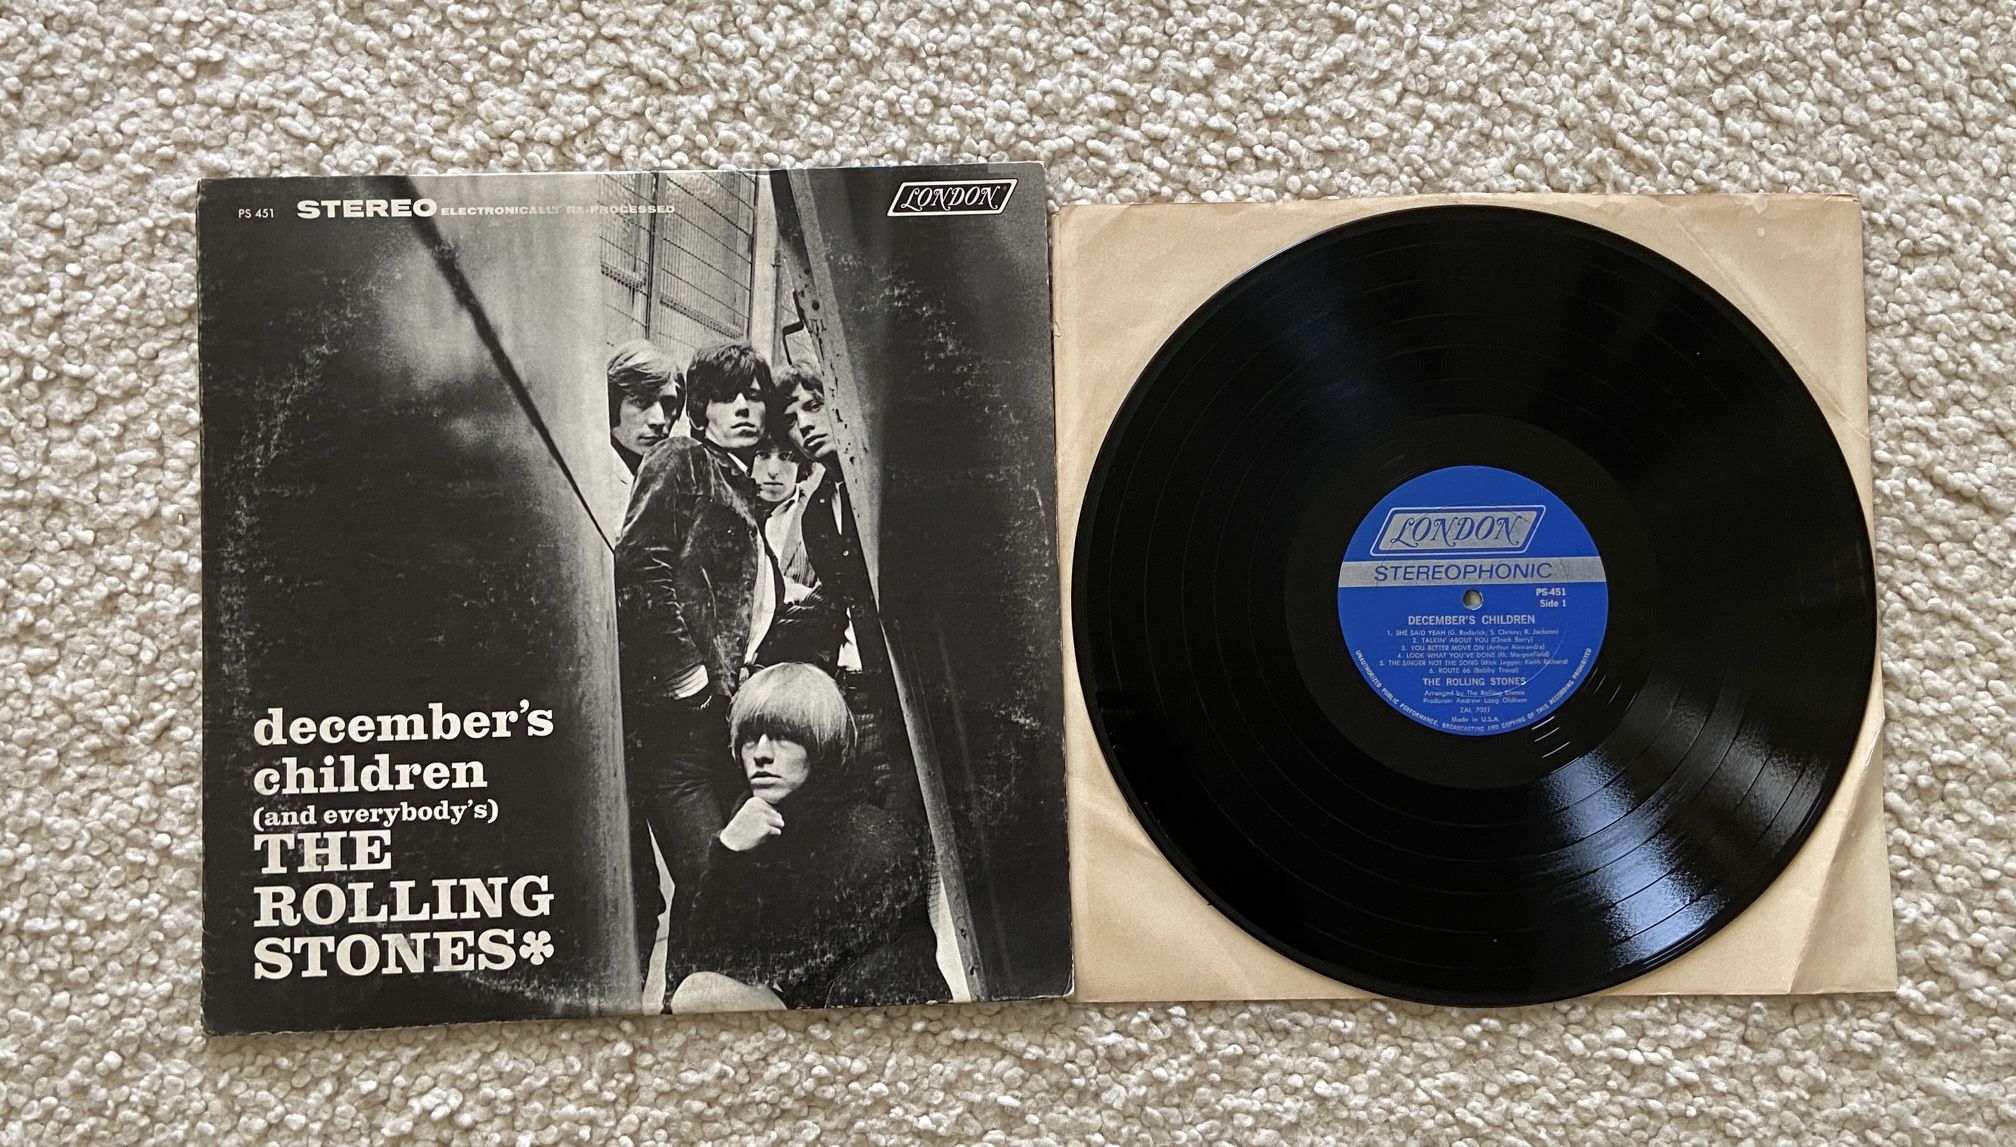 Rolling Stones “December’s Children (And Everybody’s)” Vinyl Lp 1966 London Records Monarch Pressing Beautiful Glossy Vinyl Rock. 